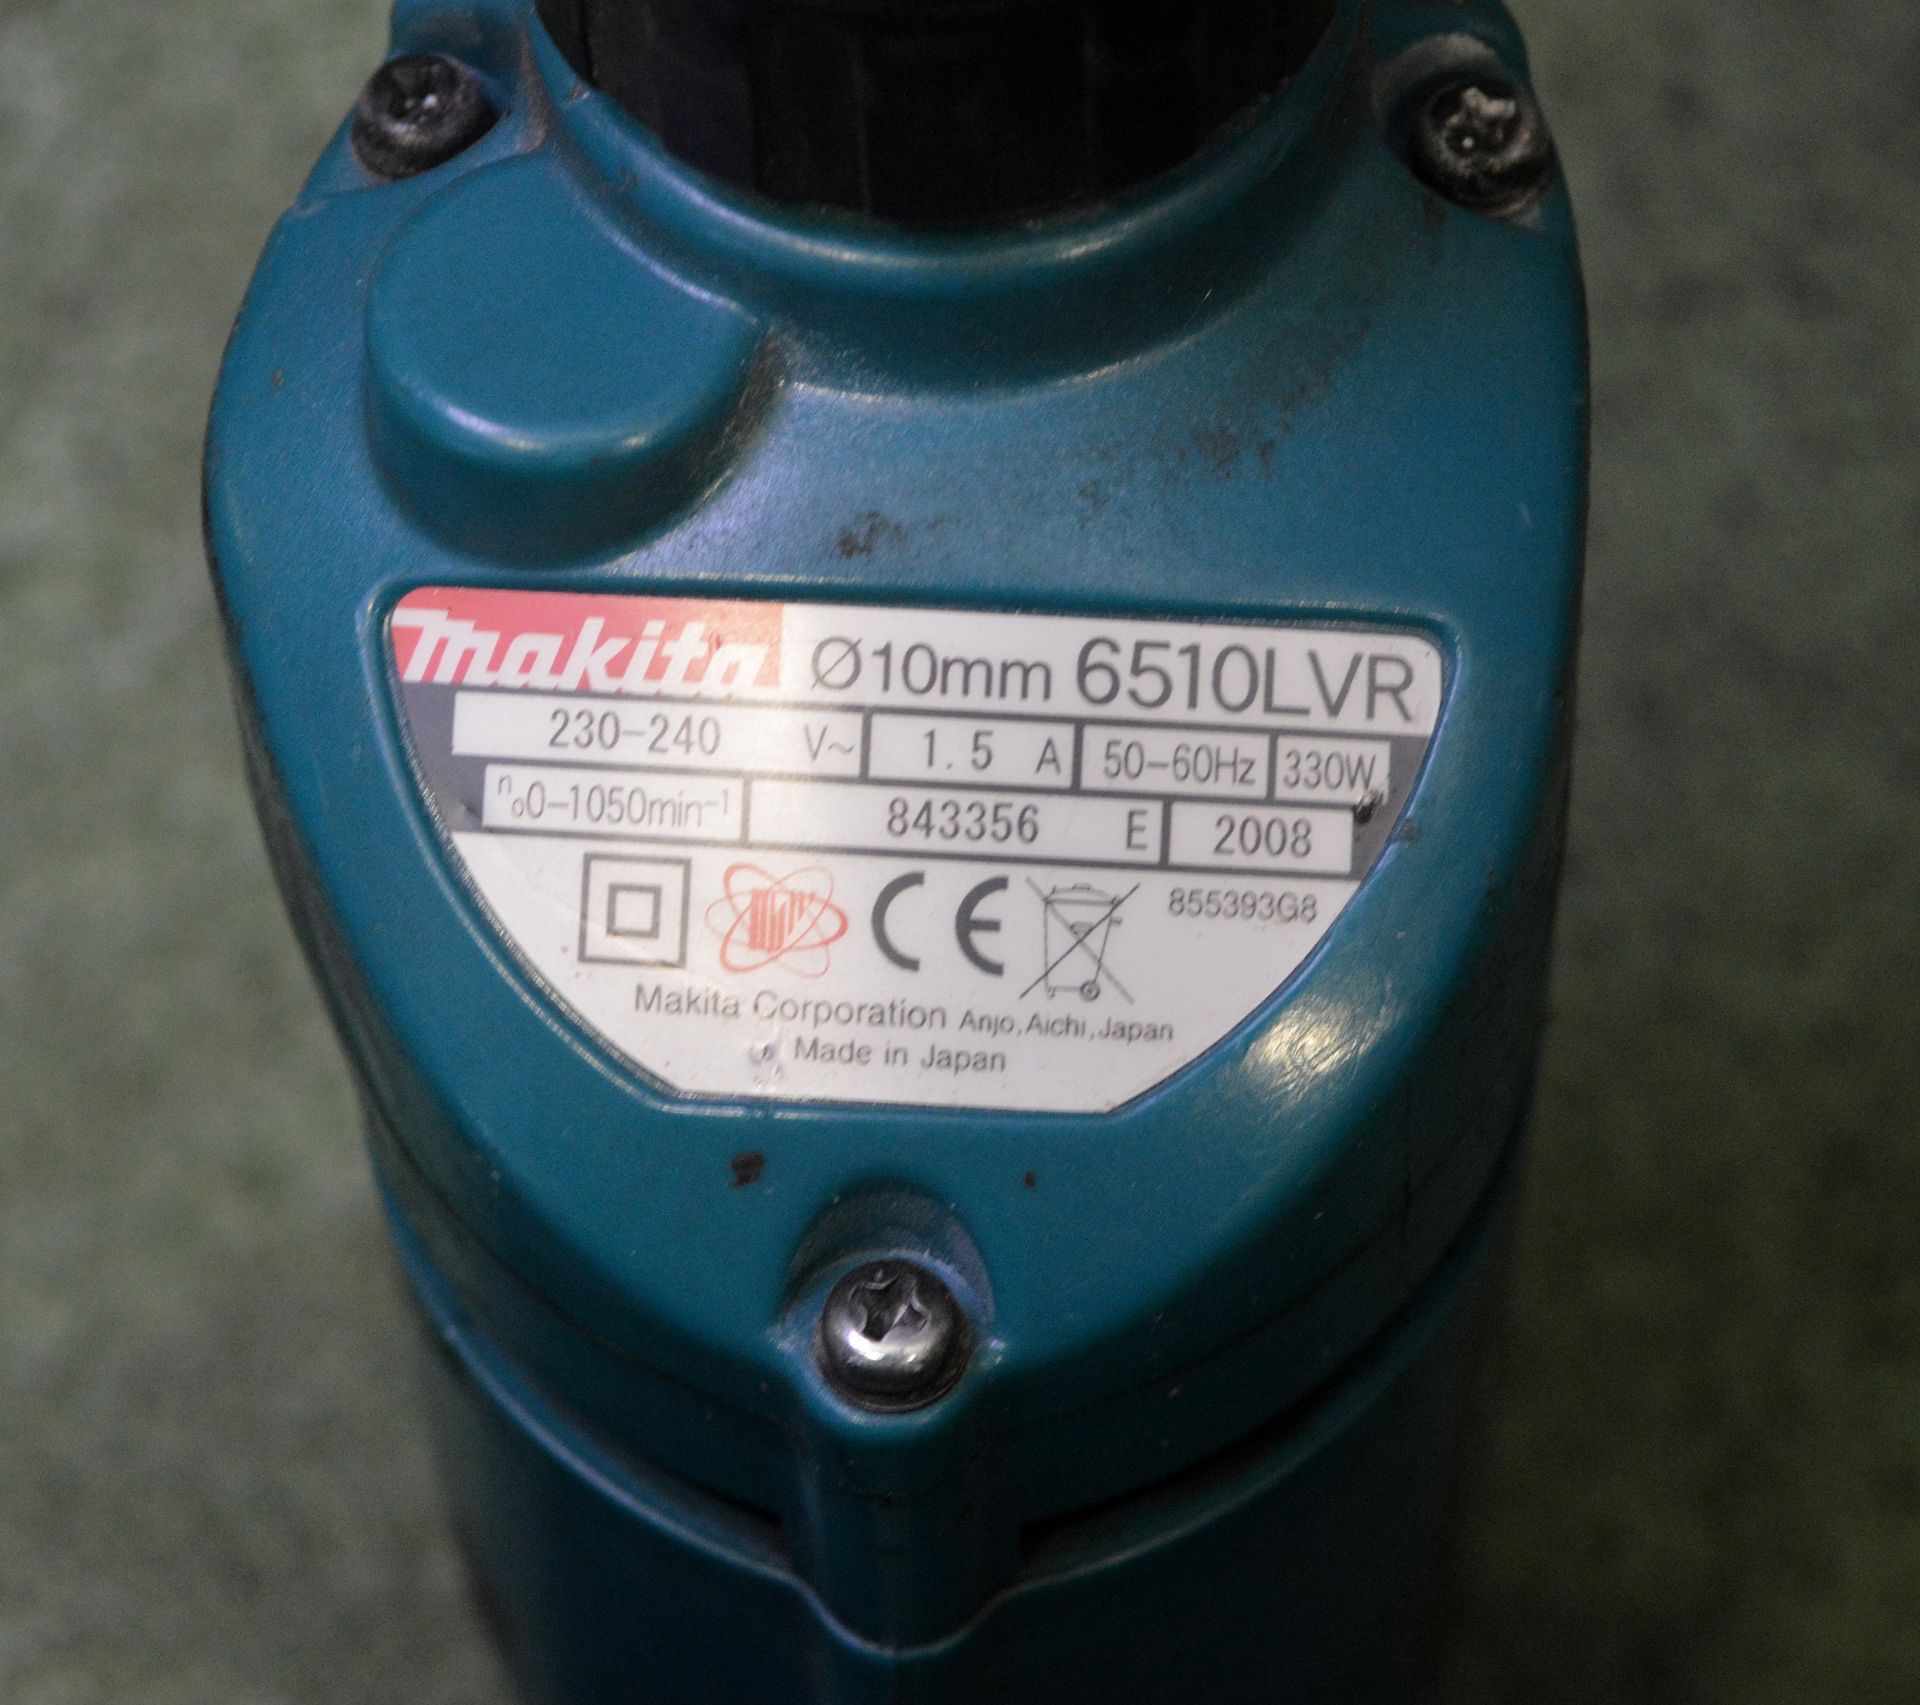 3x Makita 6510LVR Portable Electric Drills - 240v - Image 3 of 4